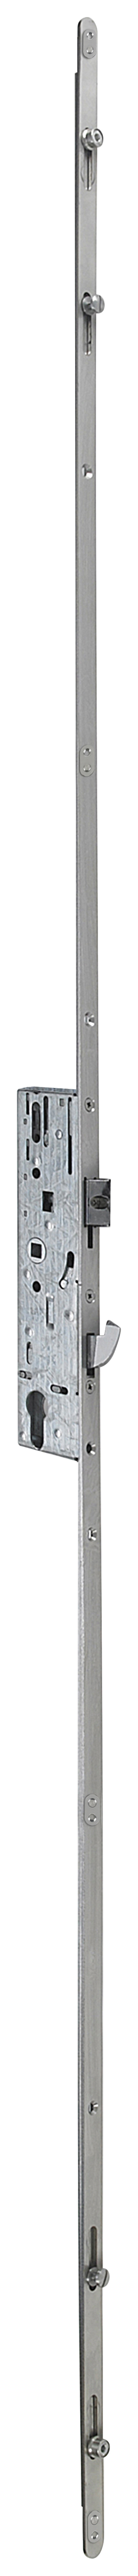 Image of Yale YDM-UNI-PVCU-35 Replacement Pcvu Door Lock - Silver